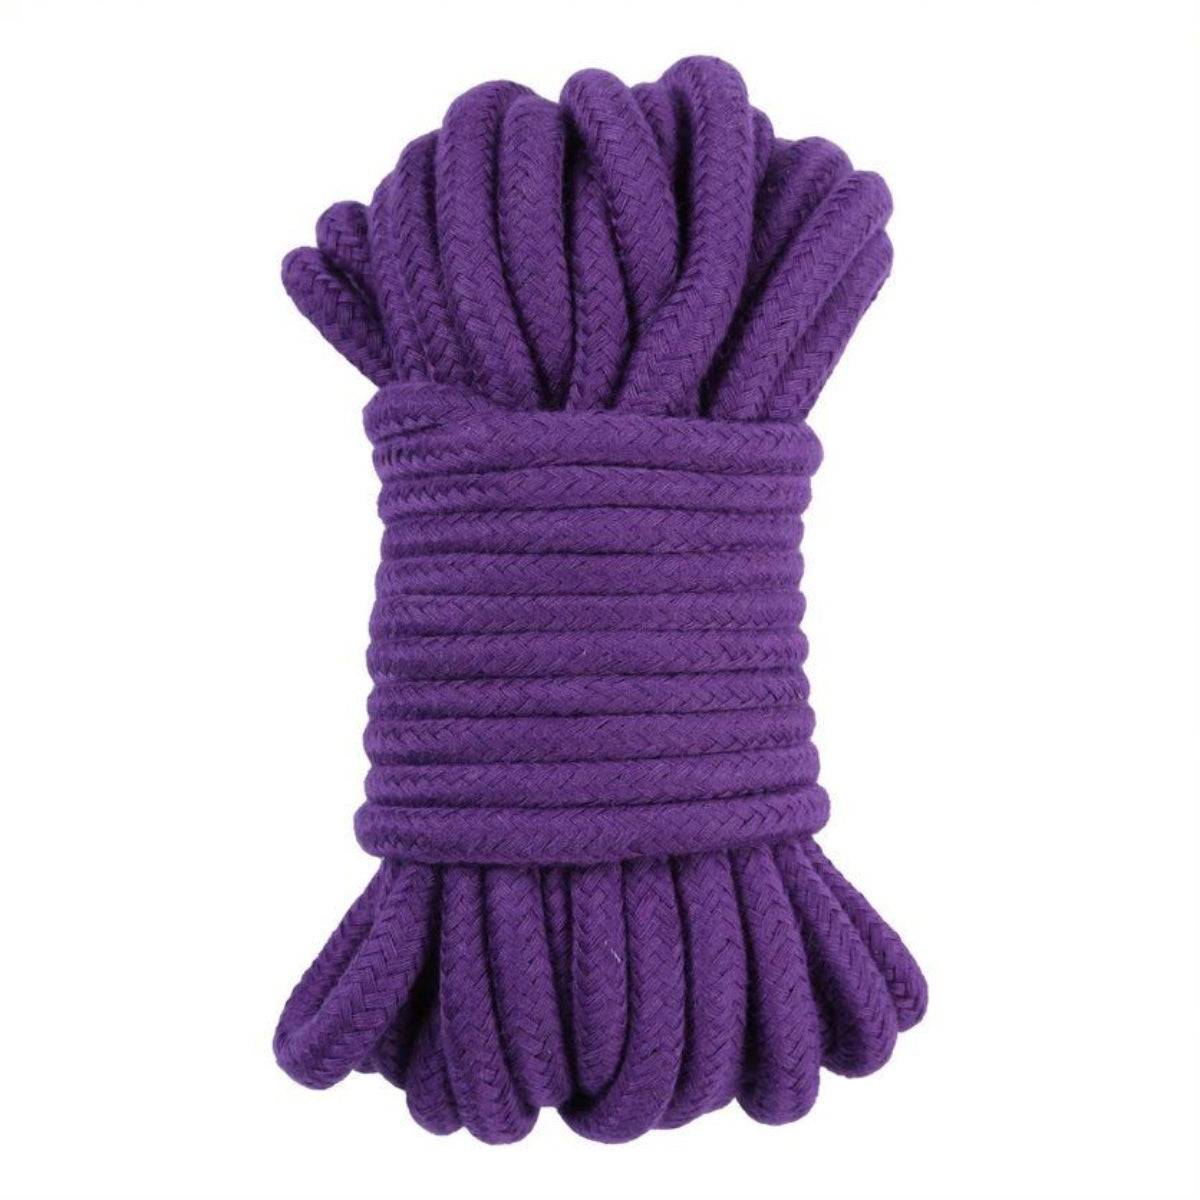 Me You Us Tie Me Up Soft Cotton Rope Purple 10m - Simply Pleasure